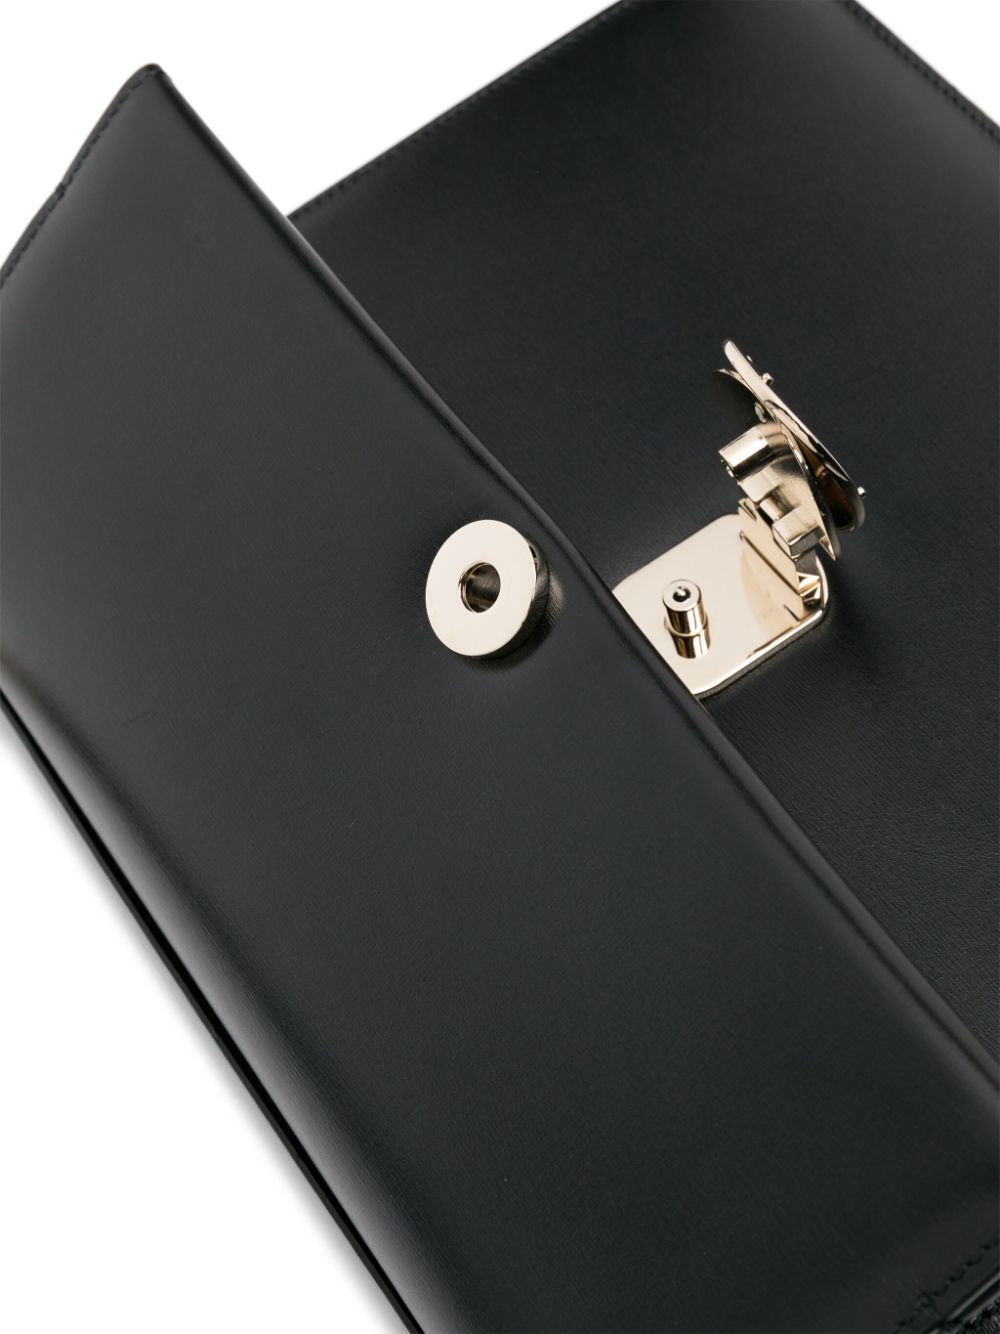 Black Grained Leather Foldover Handbag with Detachable Strap